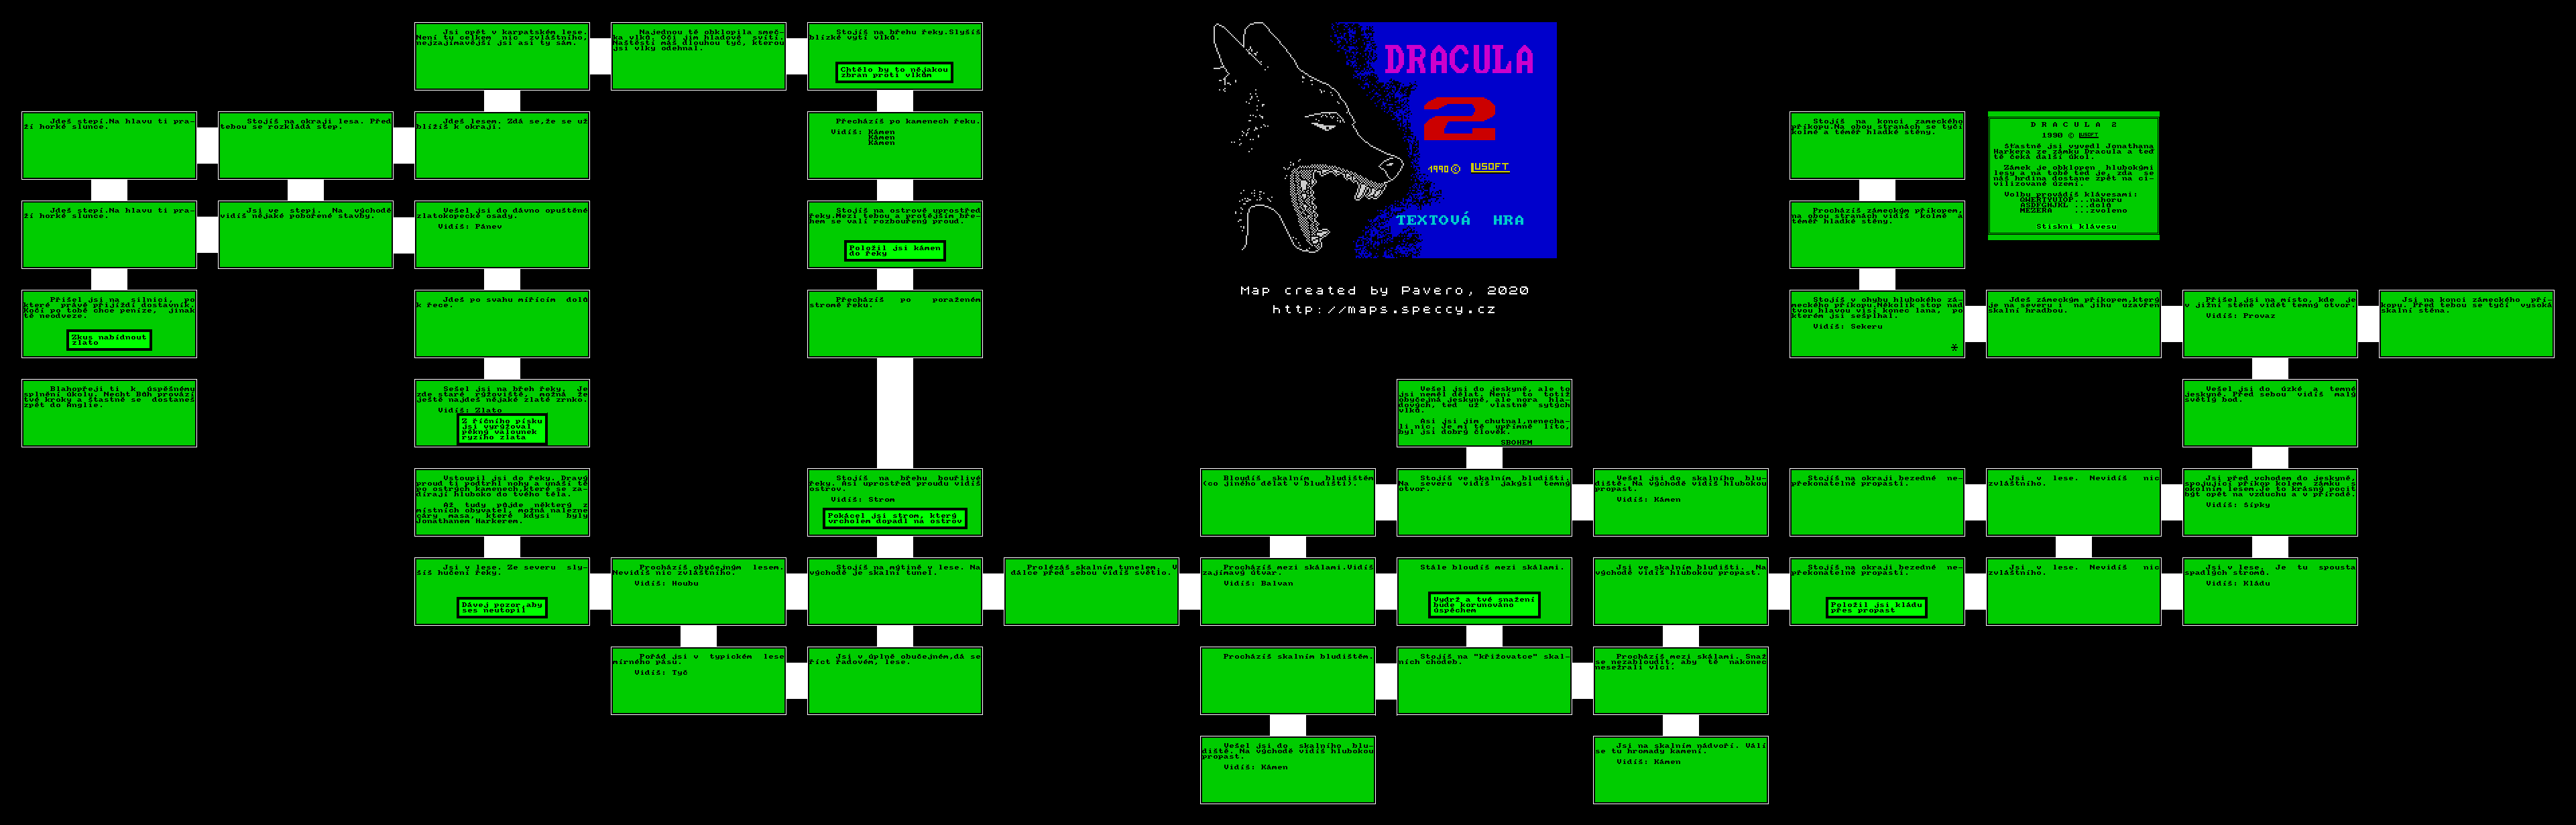 Dracula 2 - The Map